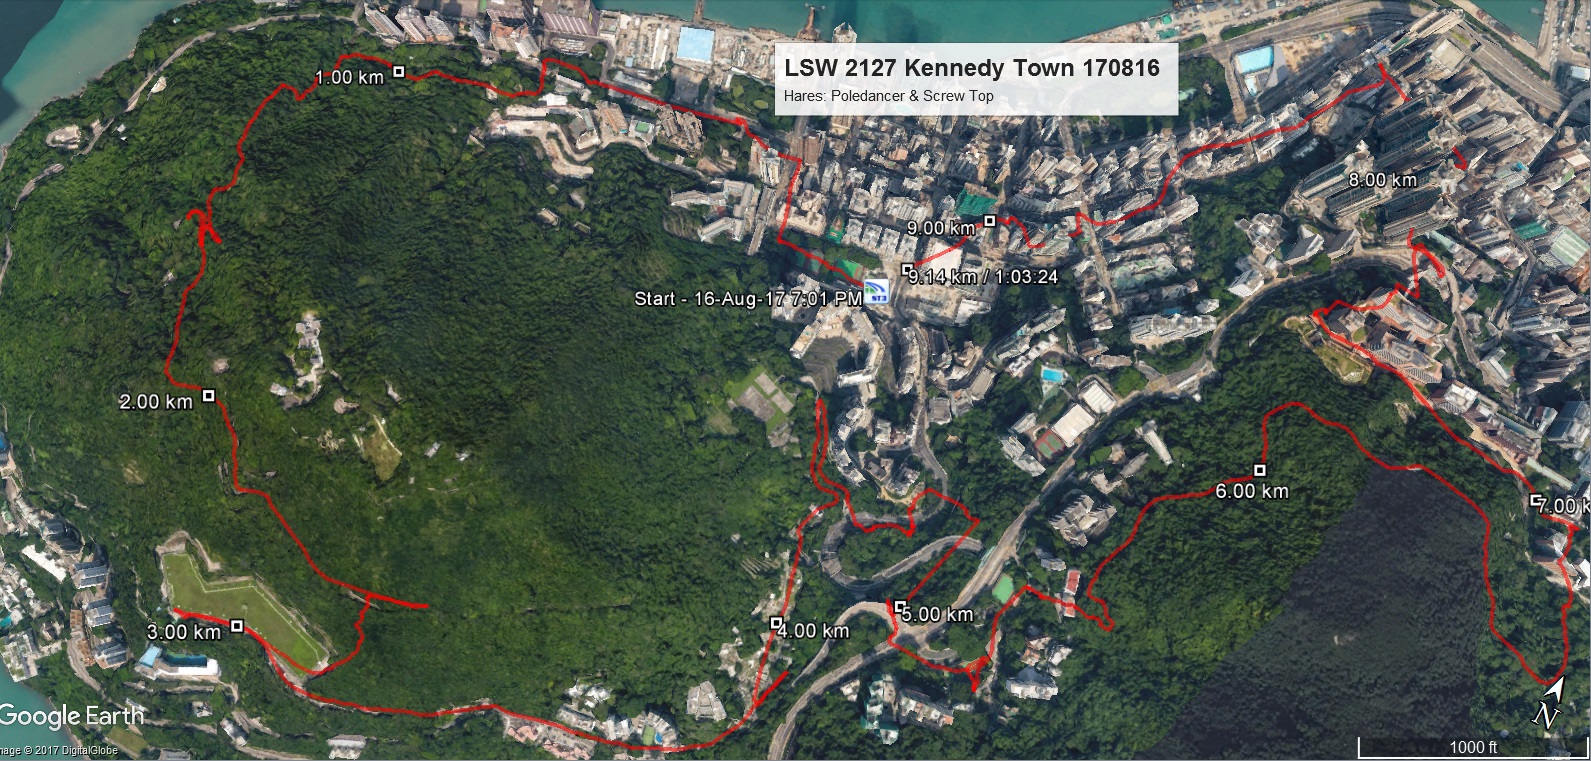 Kennedy Town 170816 9.14km 63mins